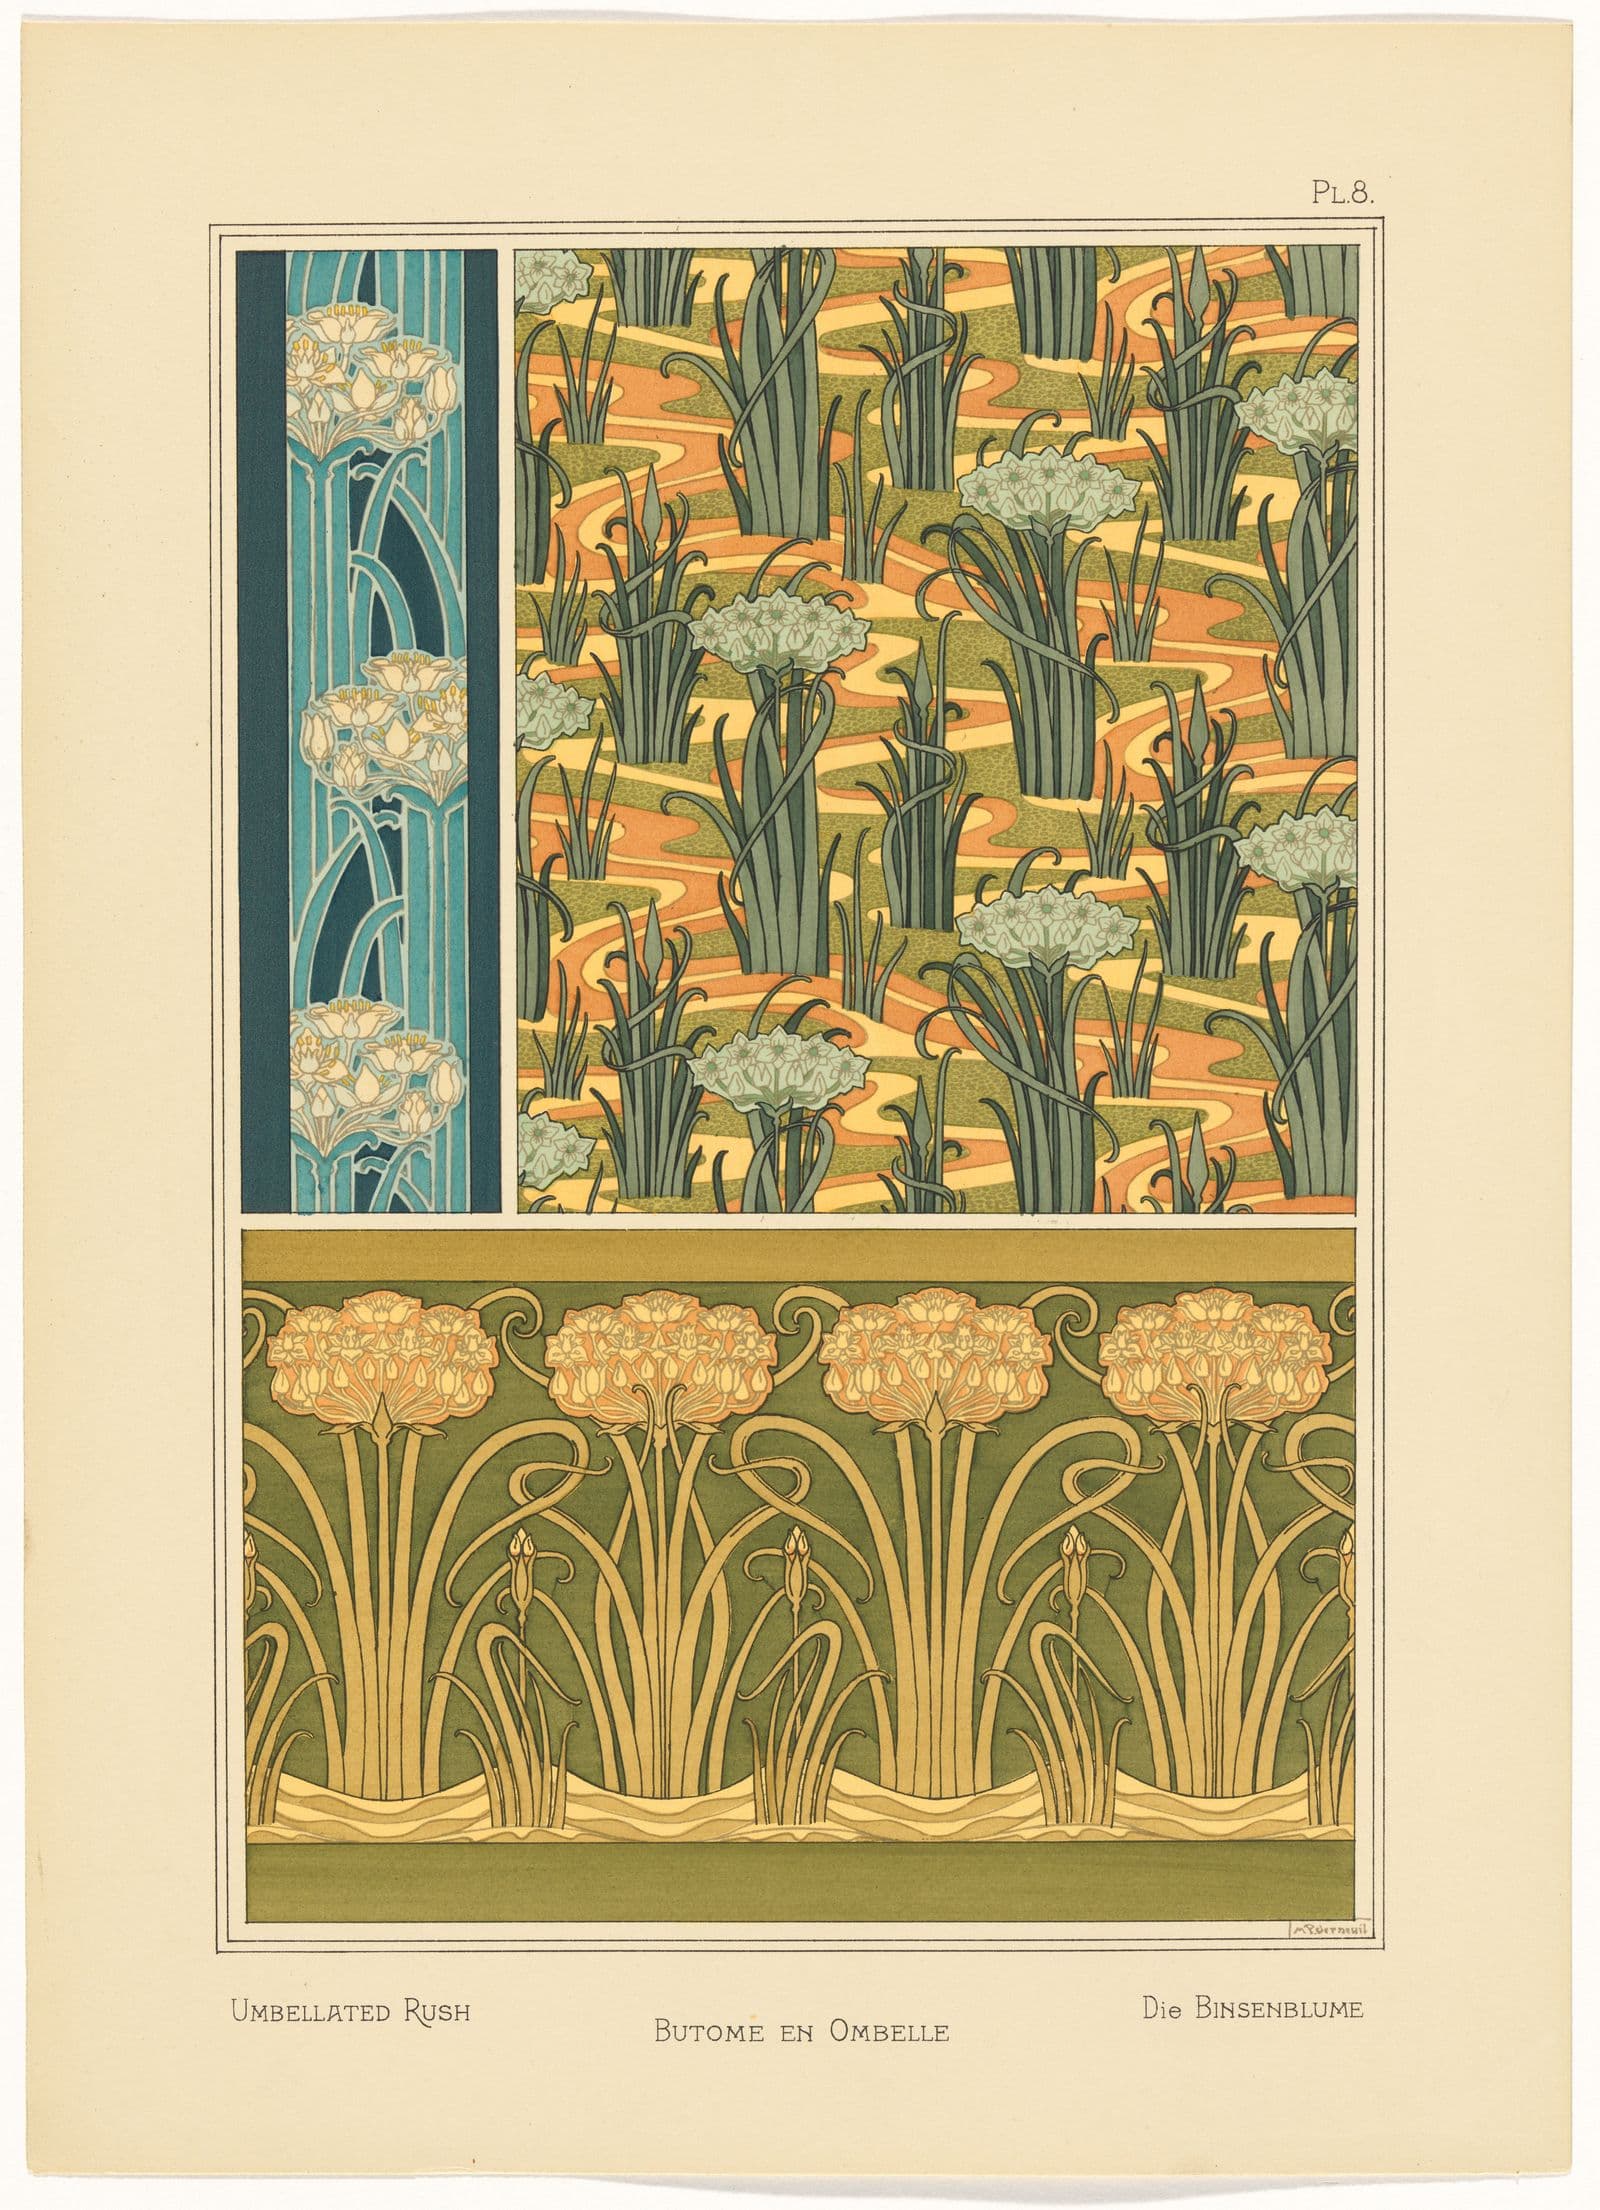 Print of repeating plant motifs.